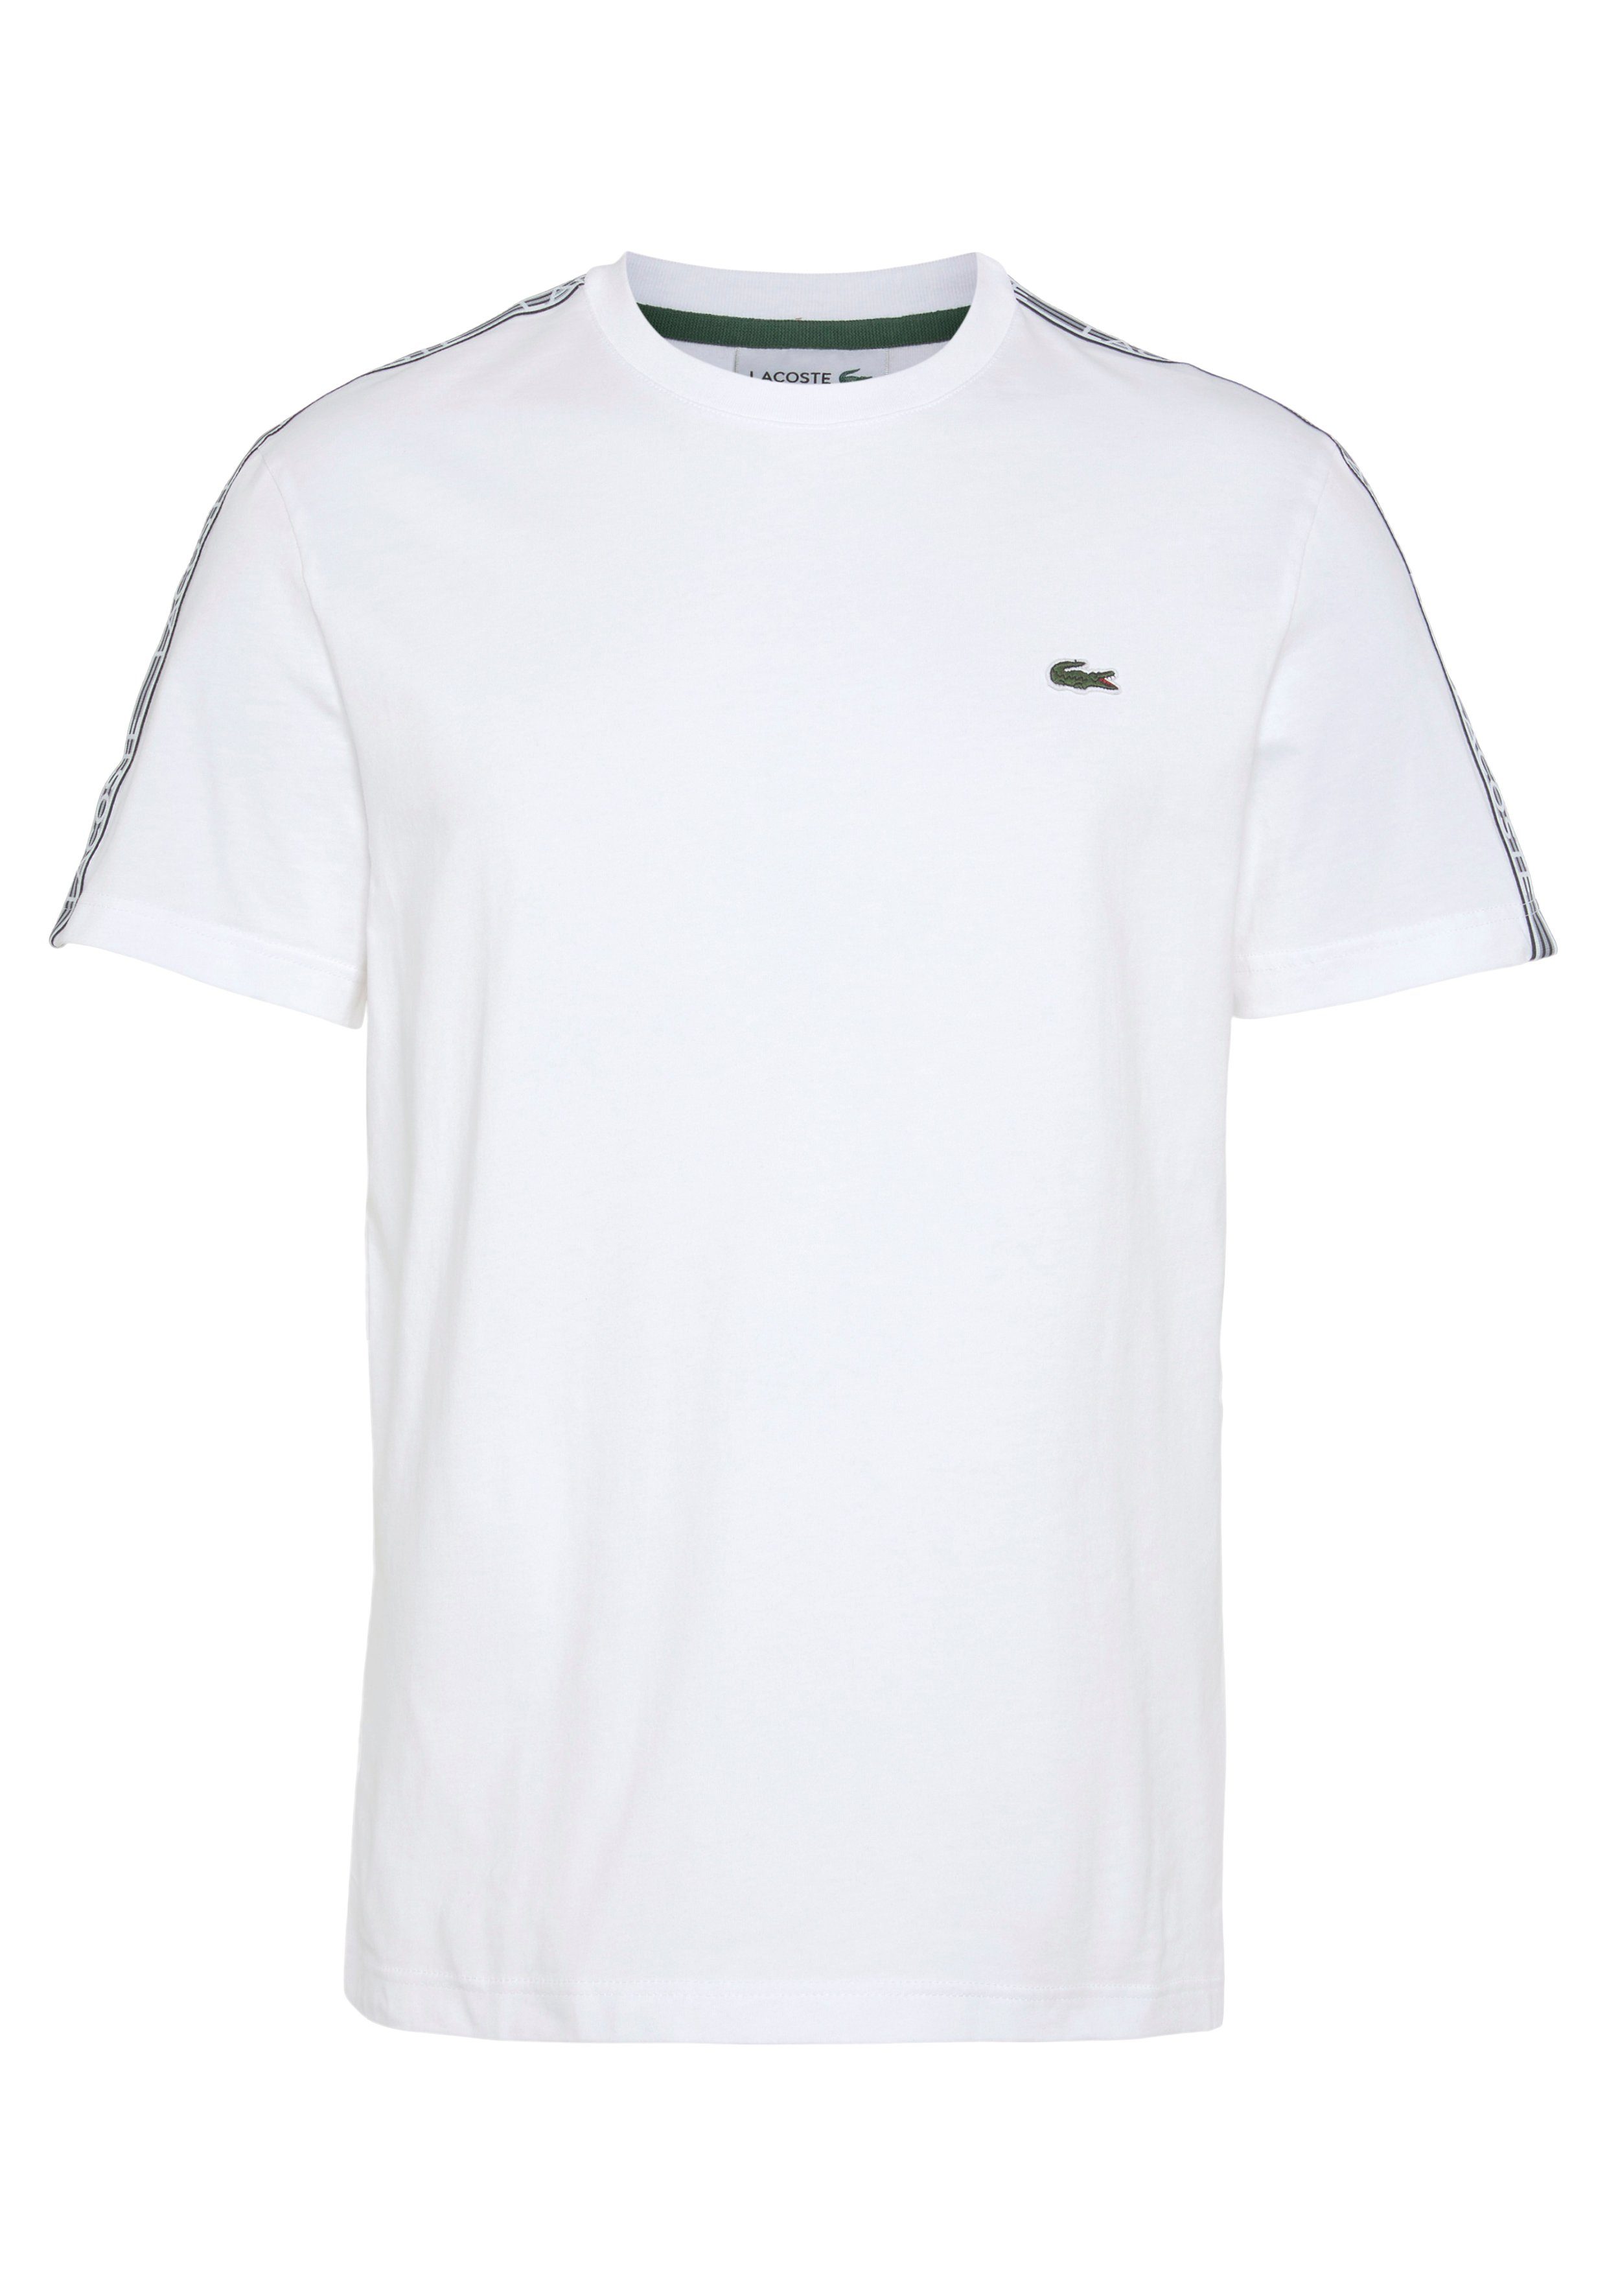 Lacoste T-Shirt mit beschriftetem den an white Kontrastband Schultern